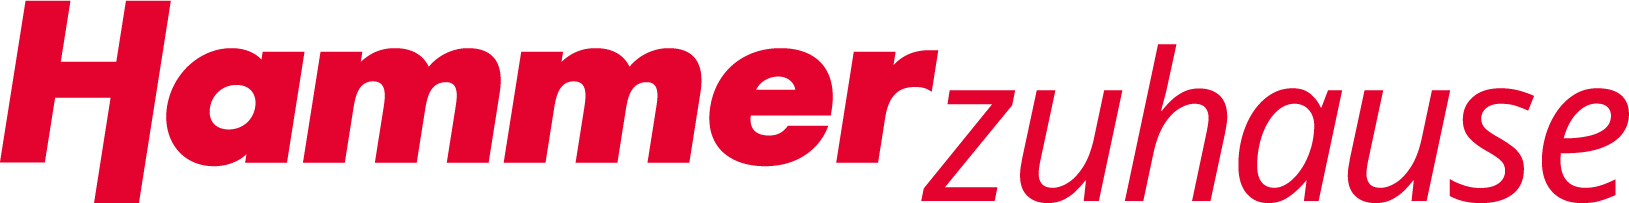 Hammer zuhause rot Logo 20190208